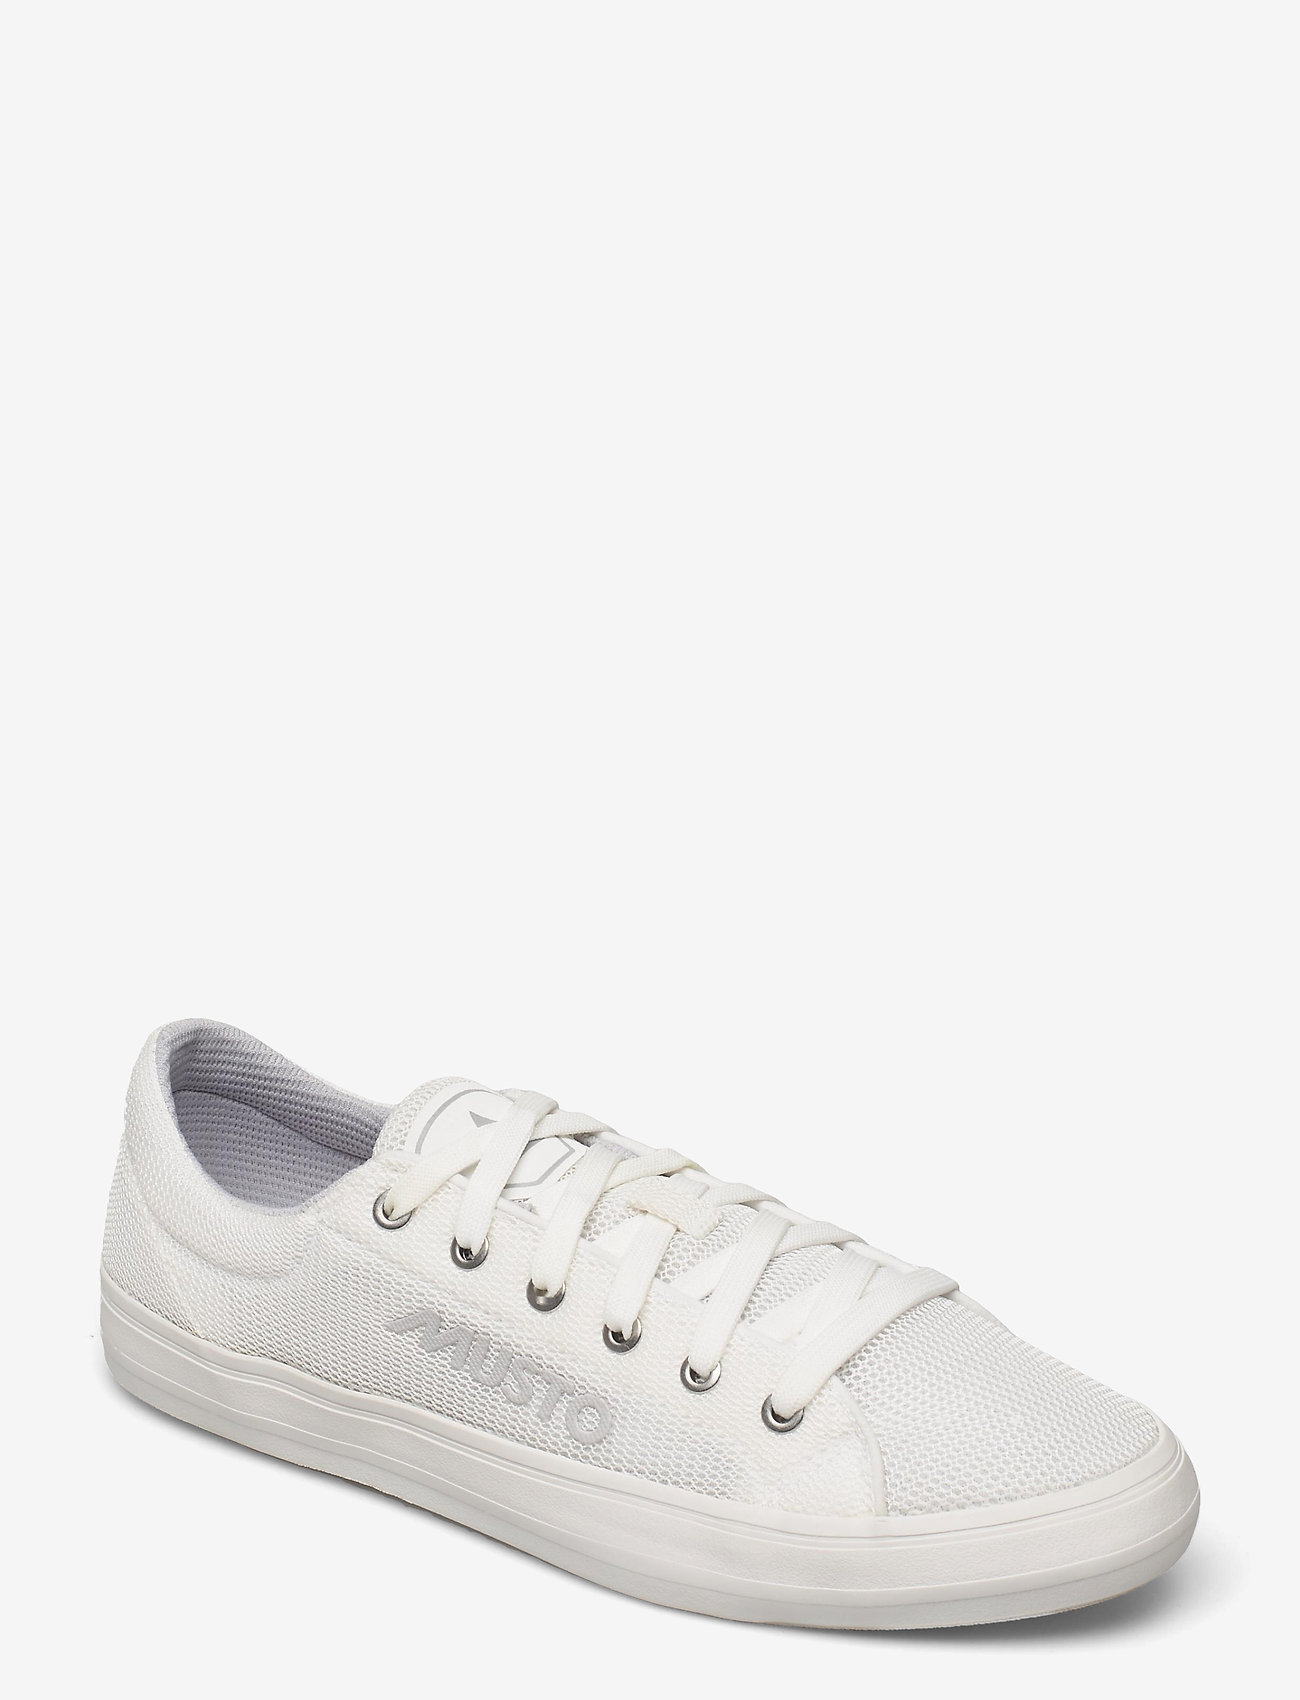 Musto - NAUTIC ZEPHYR - lave sneakers - white - 0